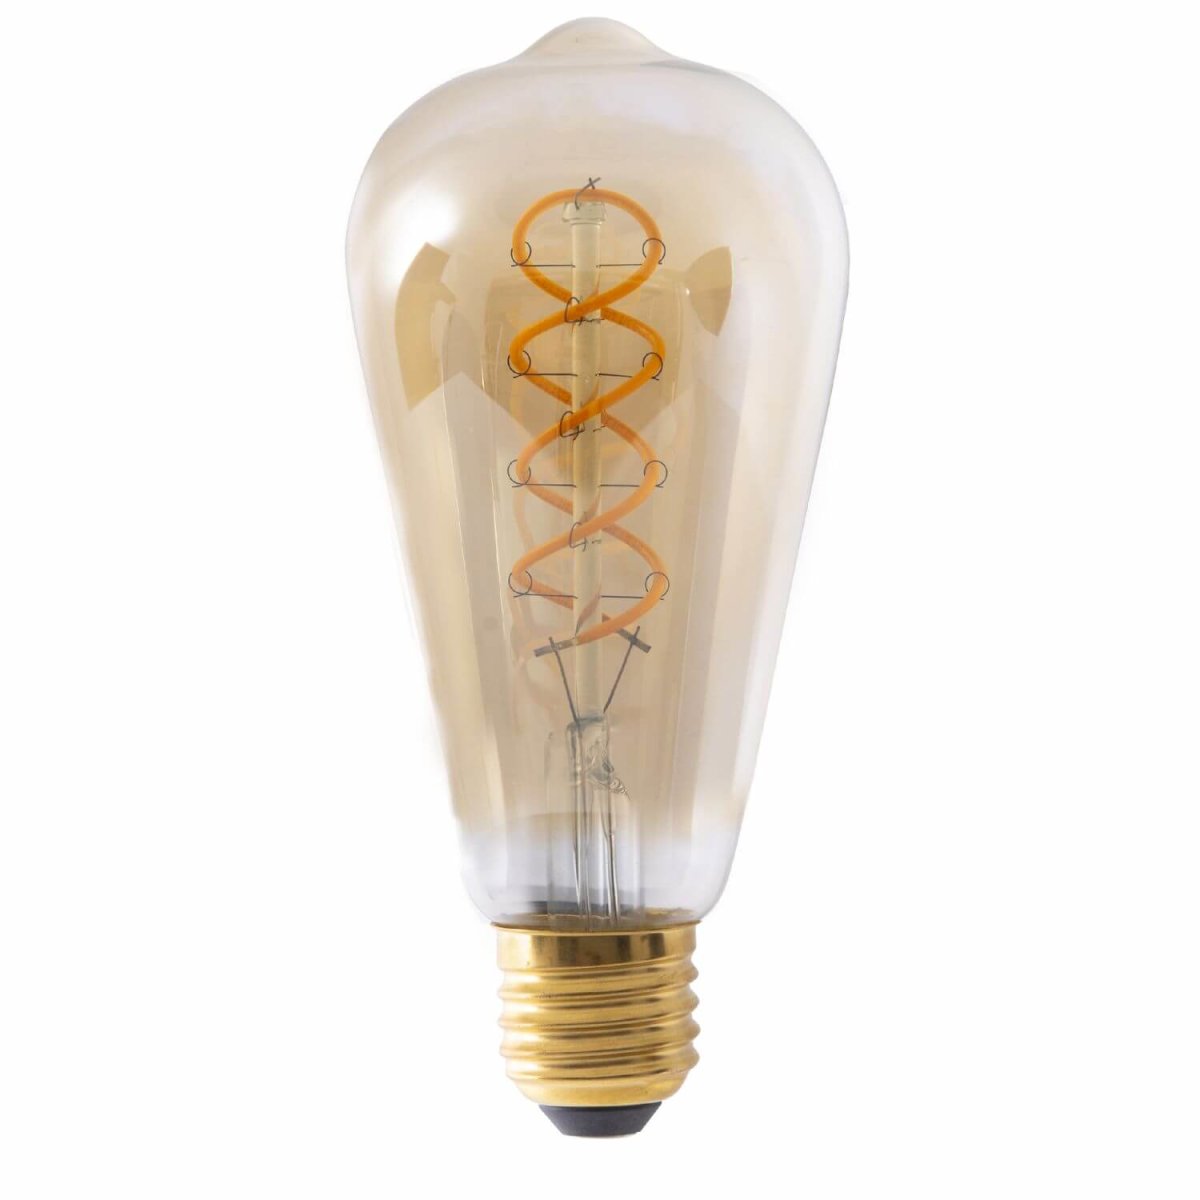 Näve 3er-Set LED Leuchtmittel DILLY 6,4x6,4cm 5W Warmweiss amber 4135